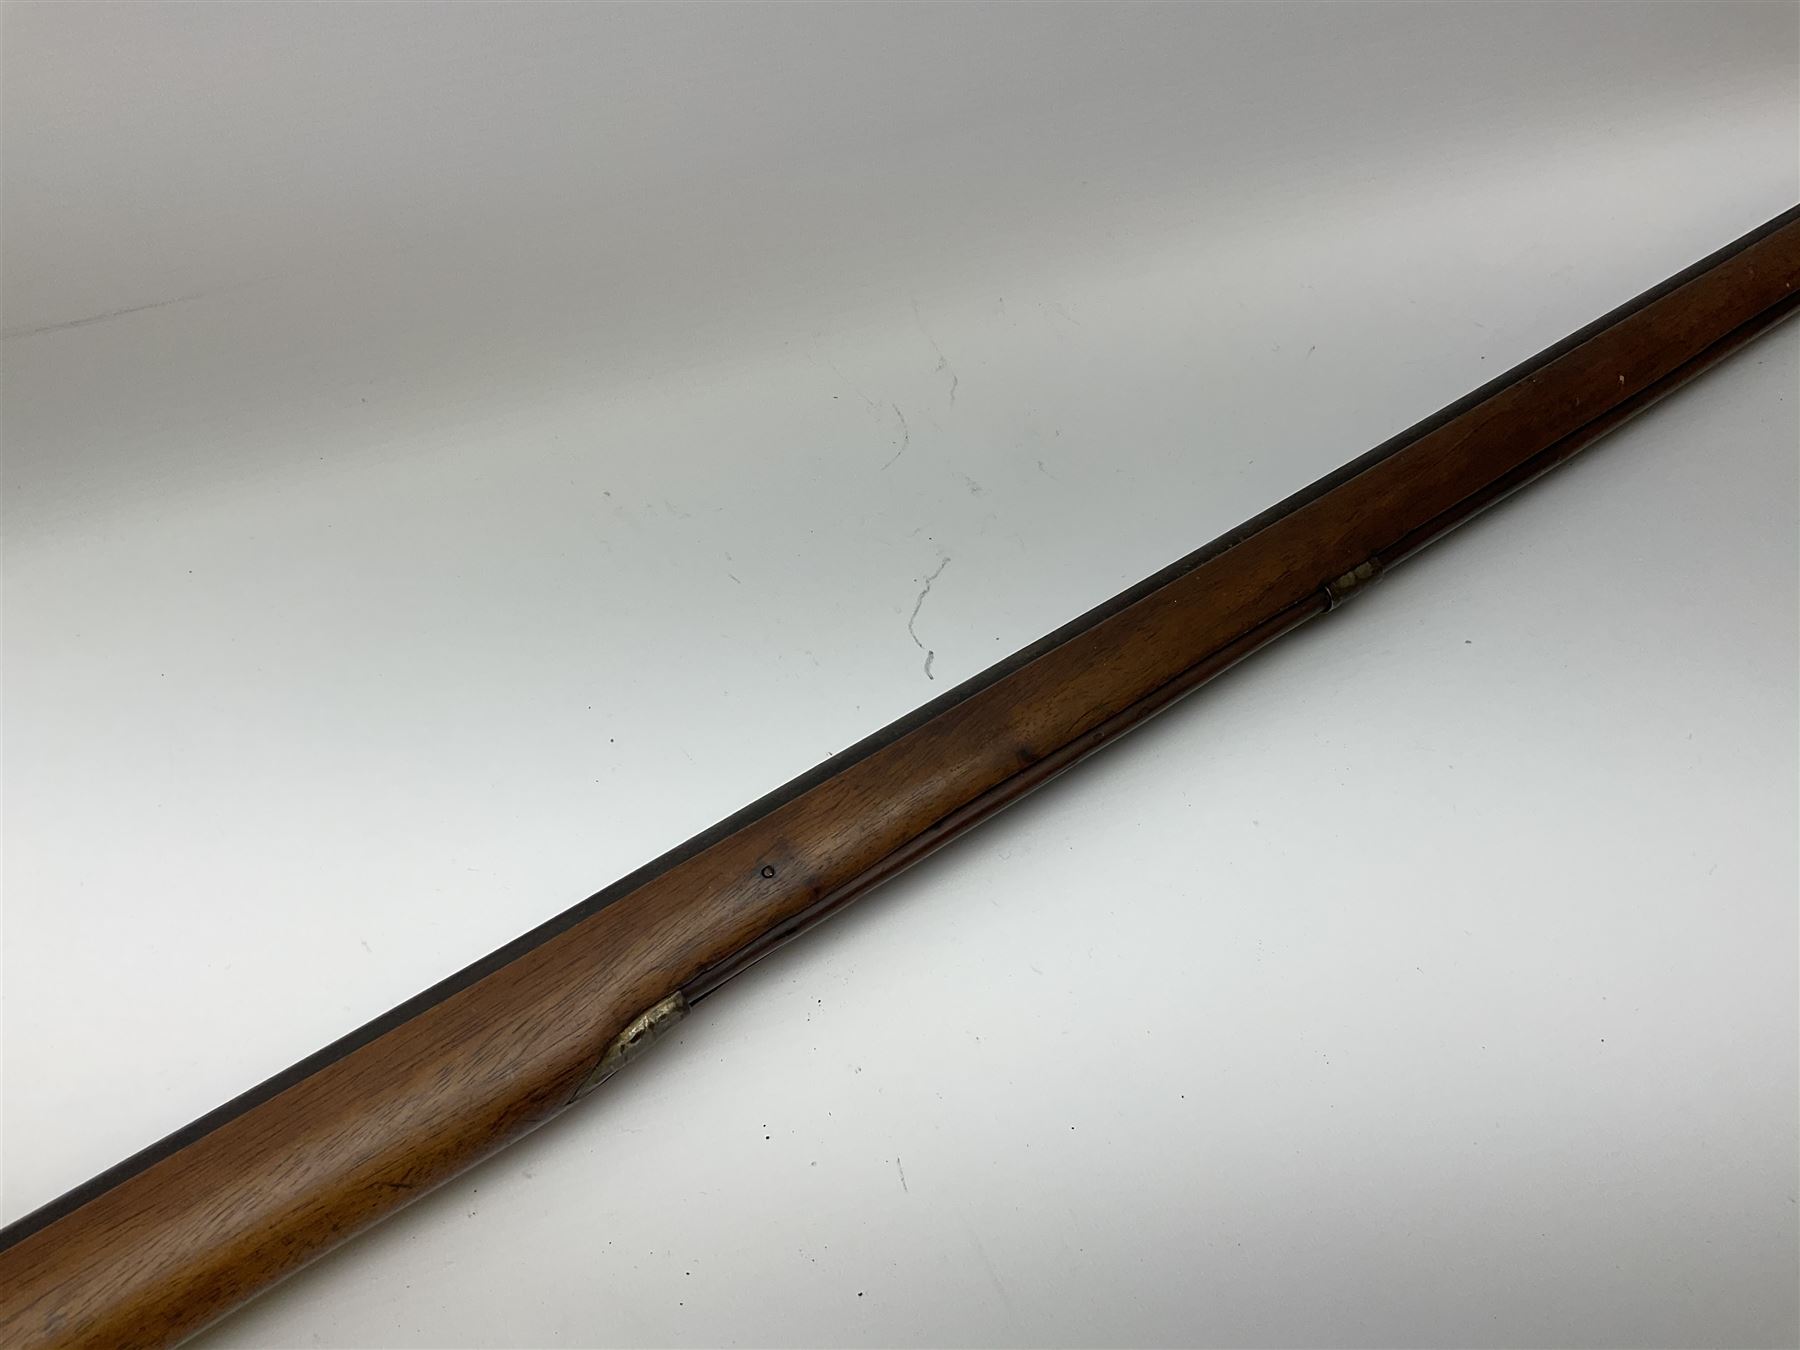 19th century flintlock musket for restoration or display - Bild 4 aus 11